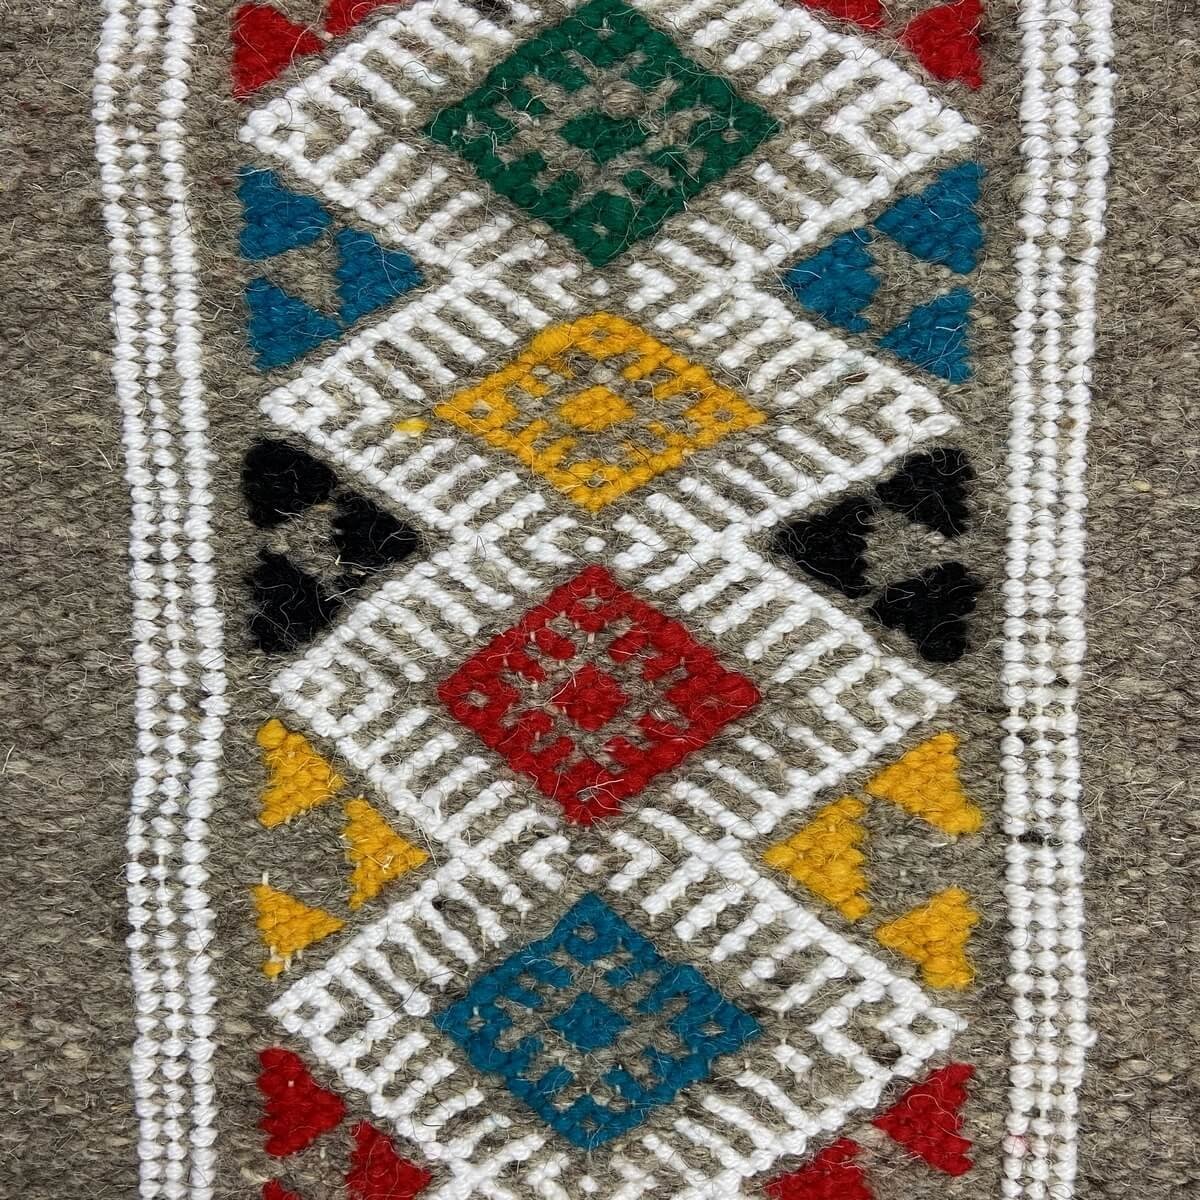 Tapis berbère Tapis Kilim Amadur 69x114 Gris (Tissé main, Laine, Tunisie) Tapis kilim tunisien style tapis marocain. Tapis recta